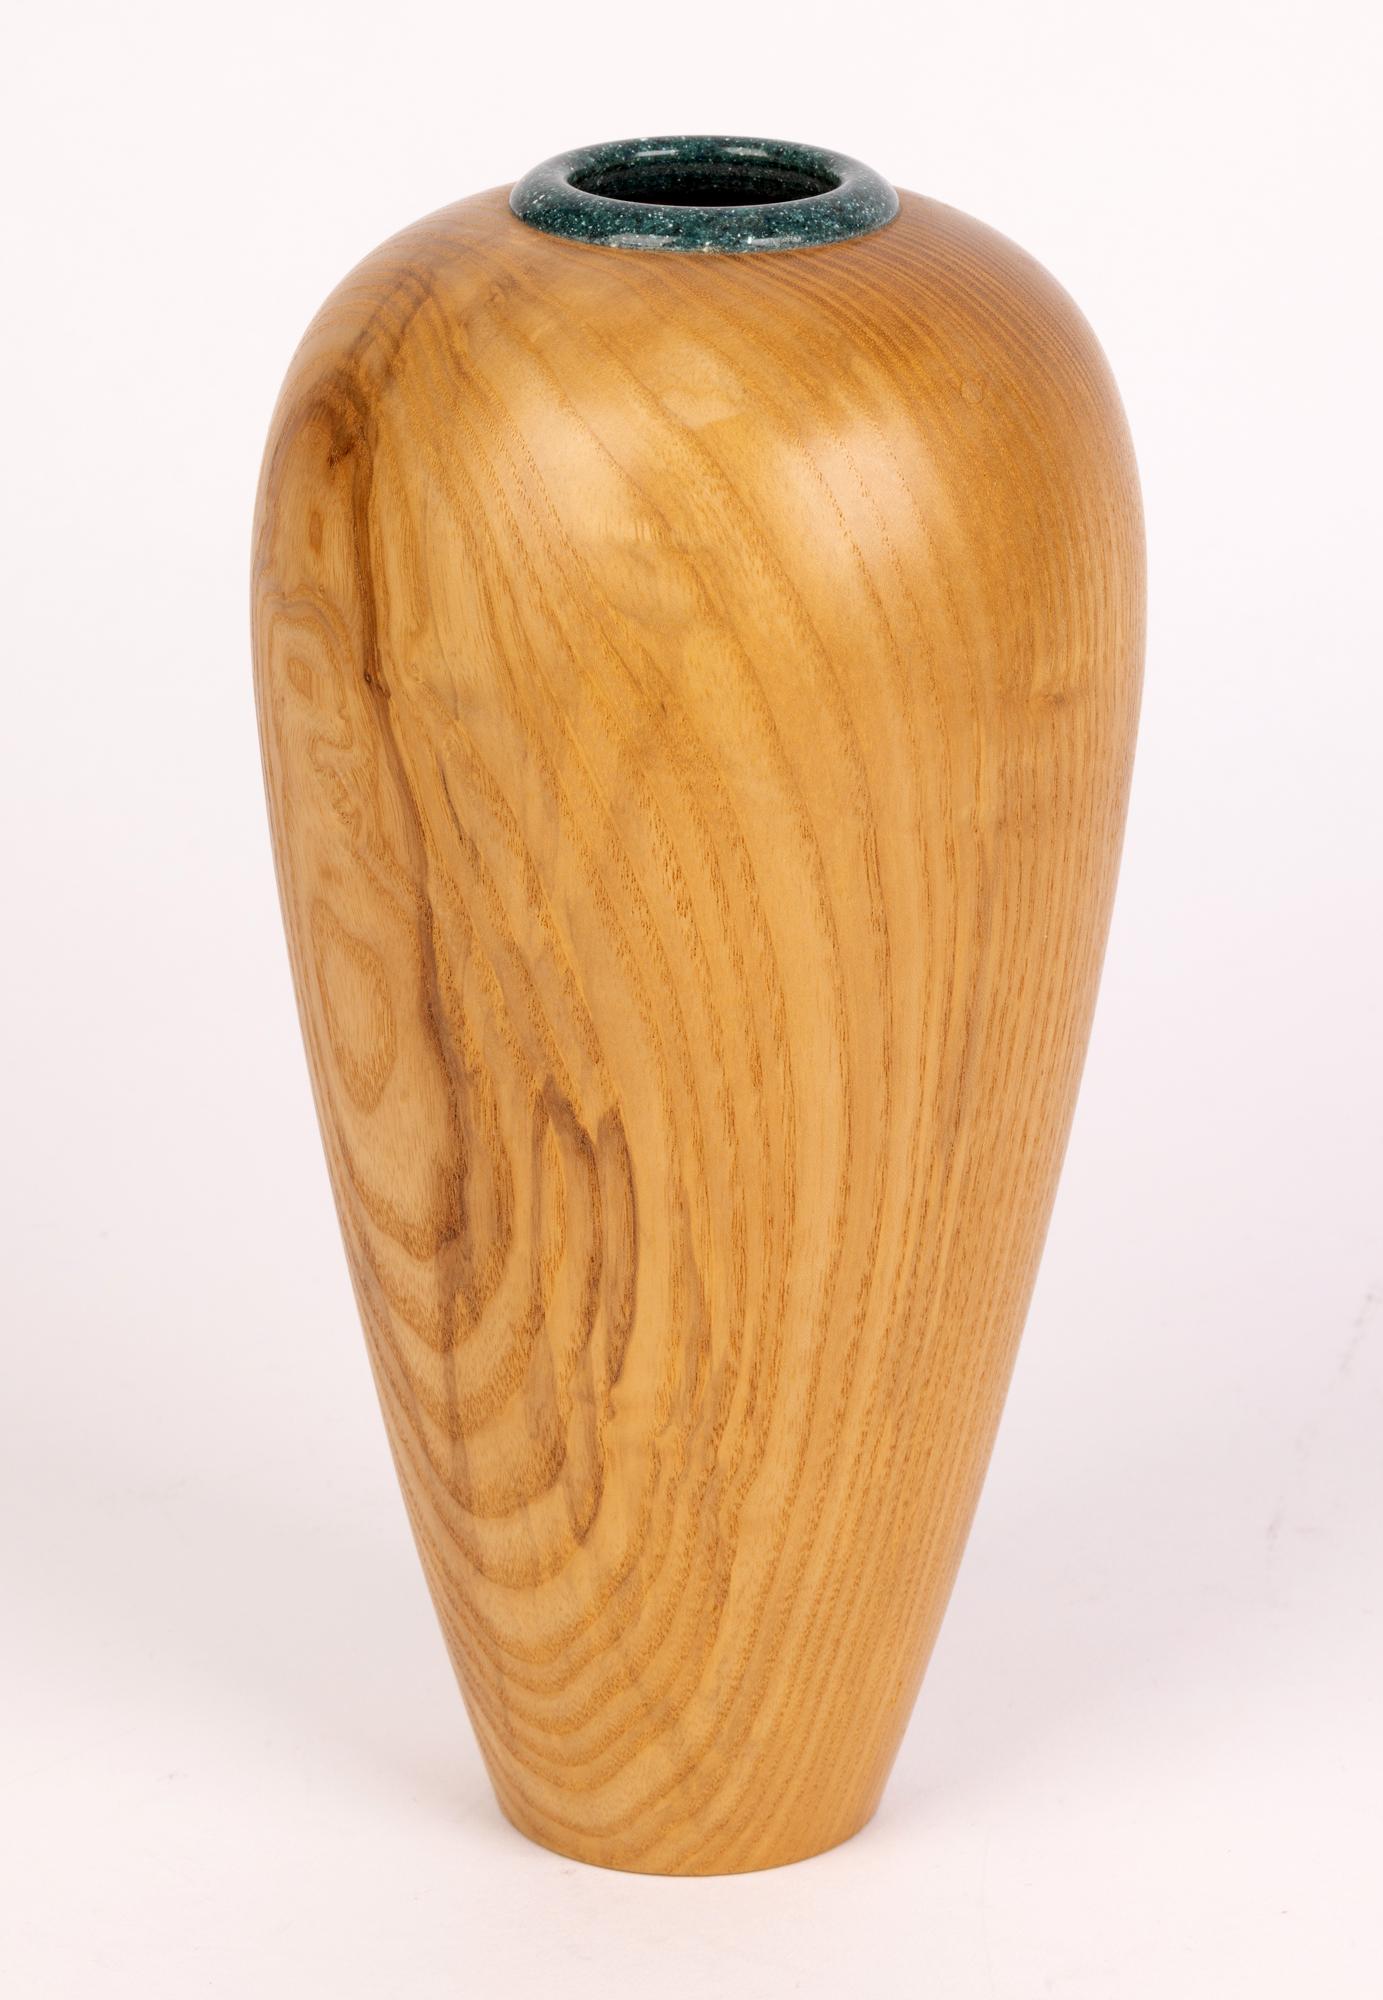 Andy James British Hand Turned Ash Wooden Vase In Good Condition For Sale In Bishop's Stortford, Hertfordshire